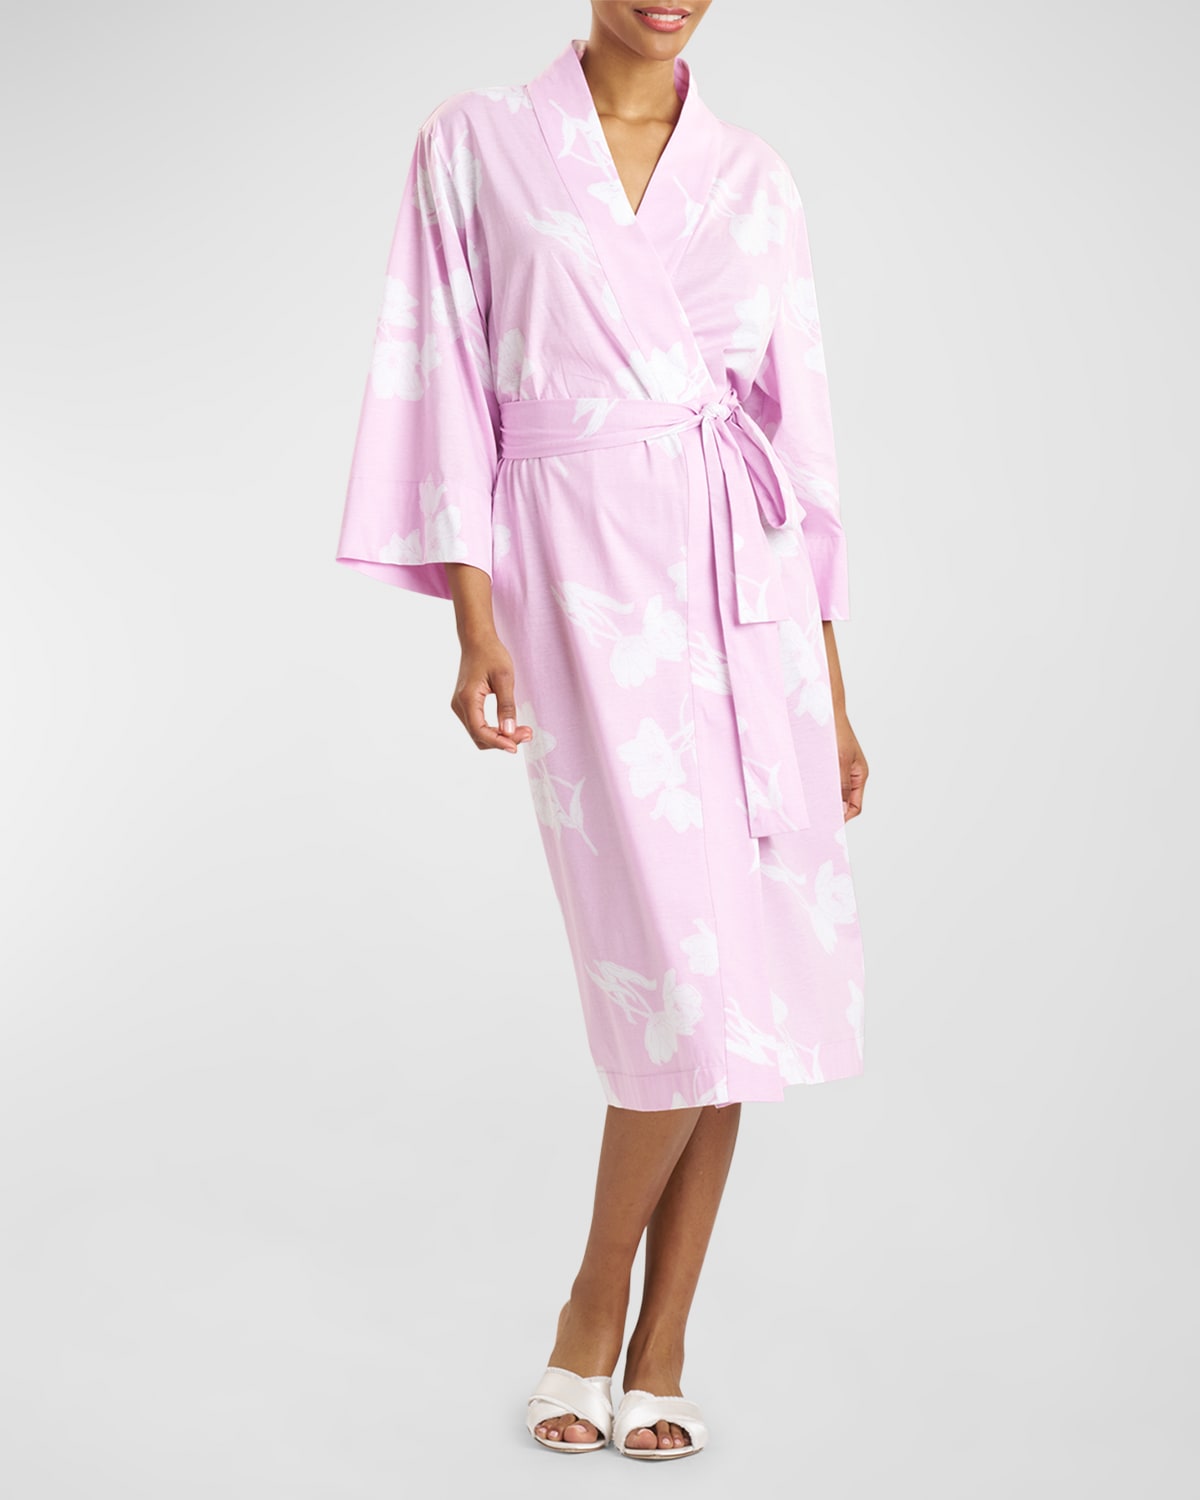 Hana Floral-Print 3/4-Sleeve Cotton Robe